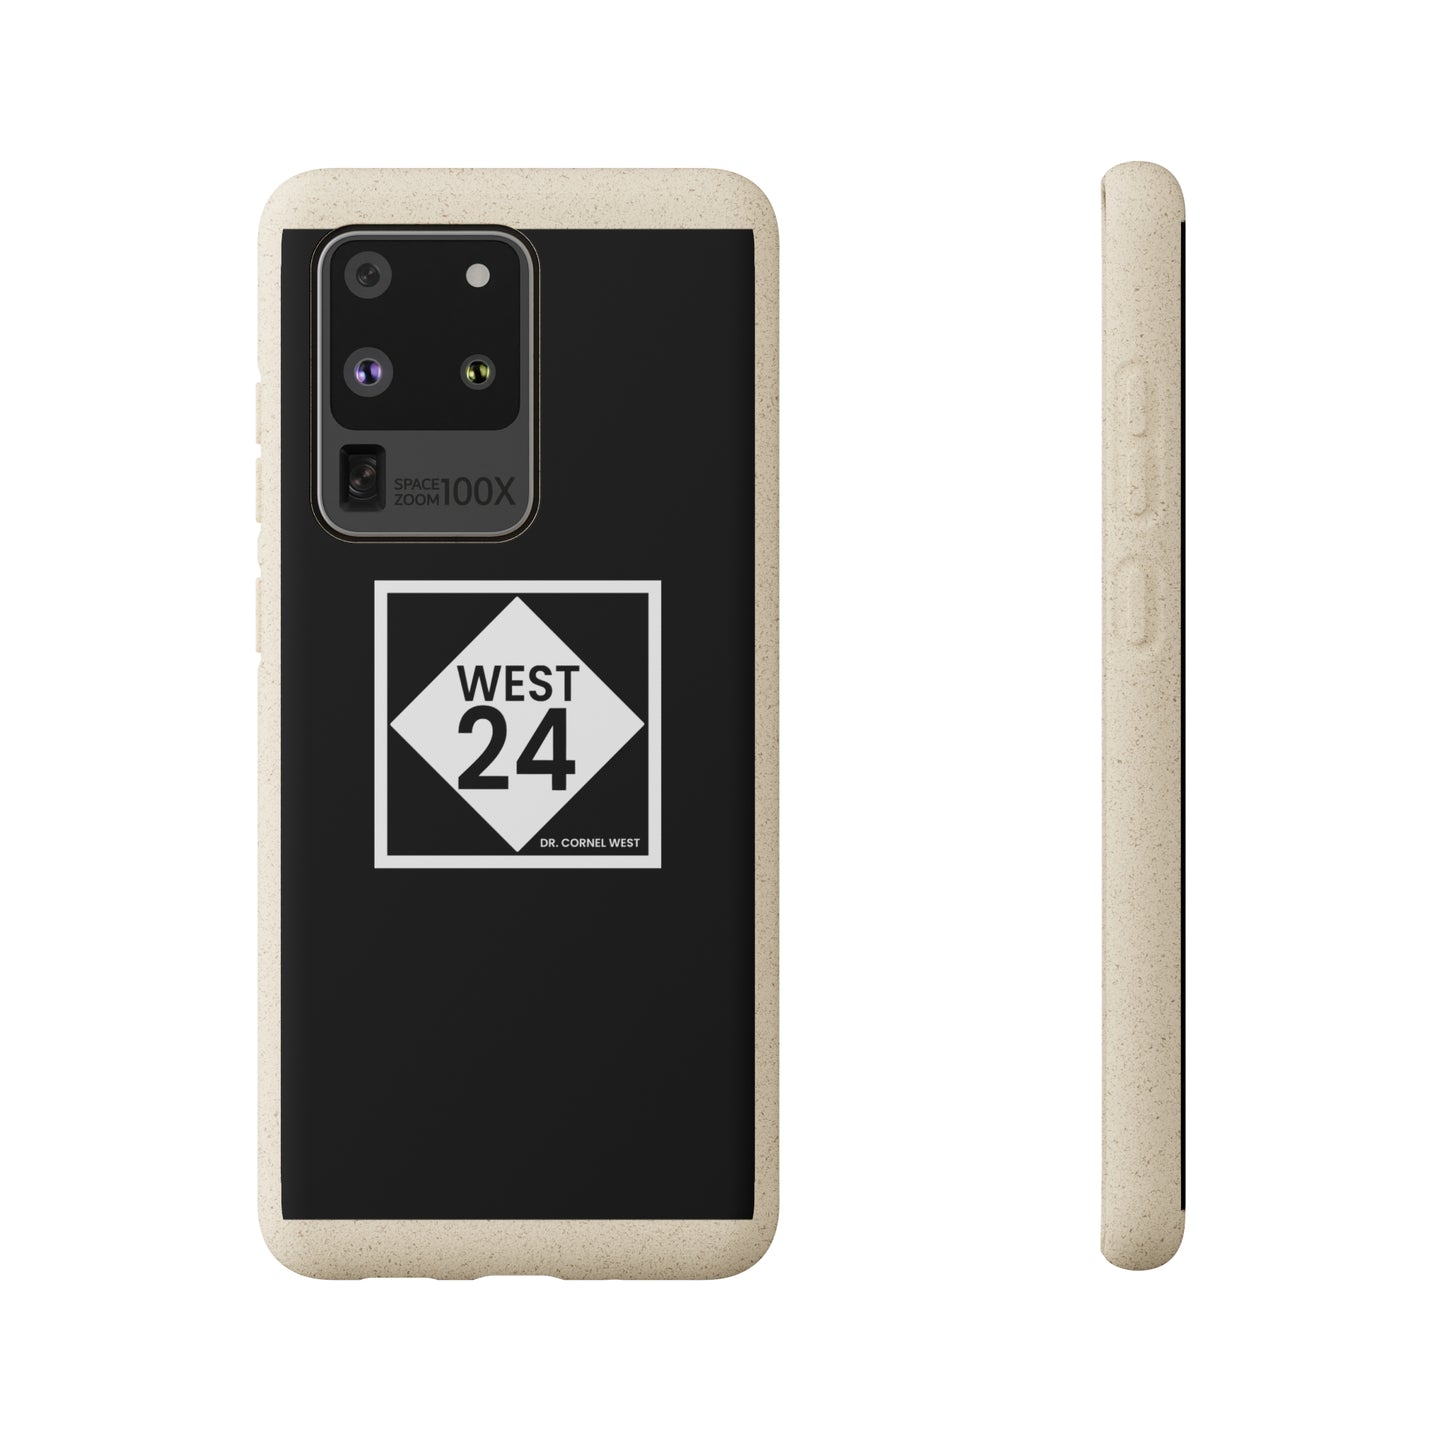 Revolution Highway Biodegradable Phone Cases